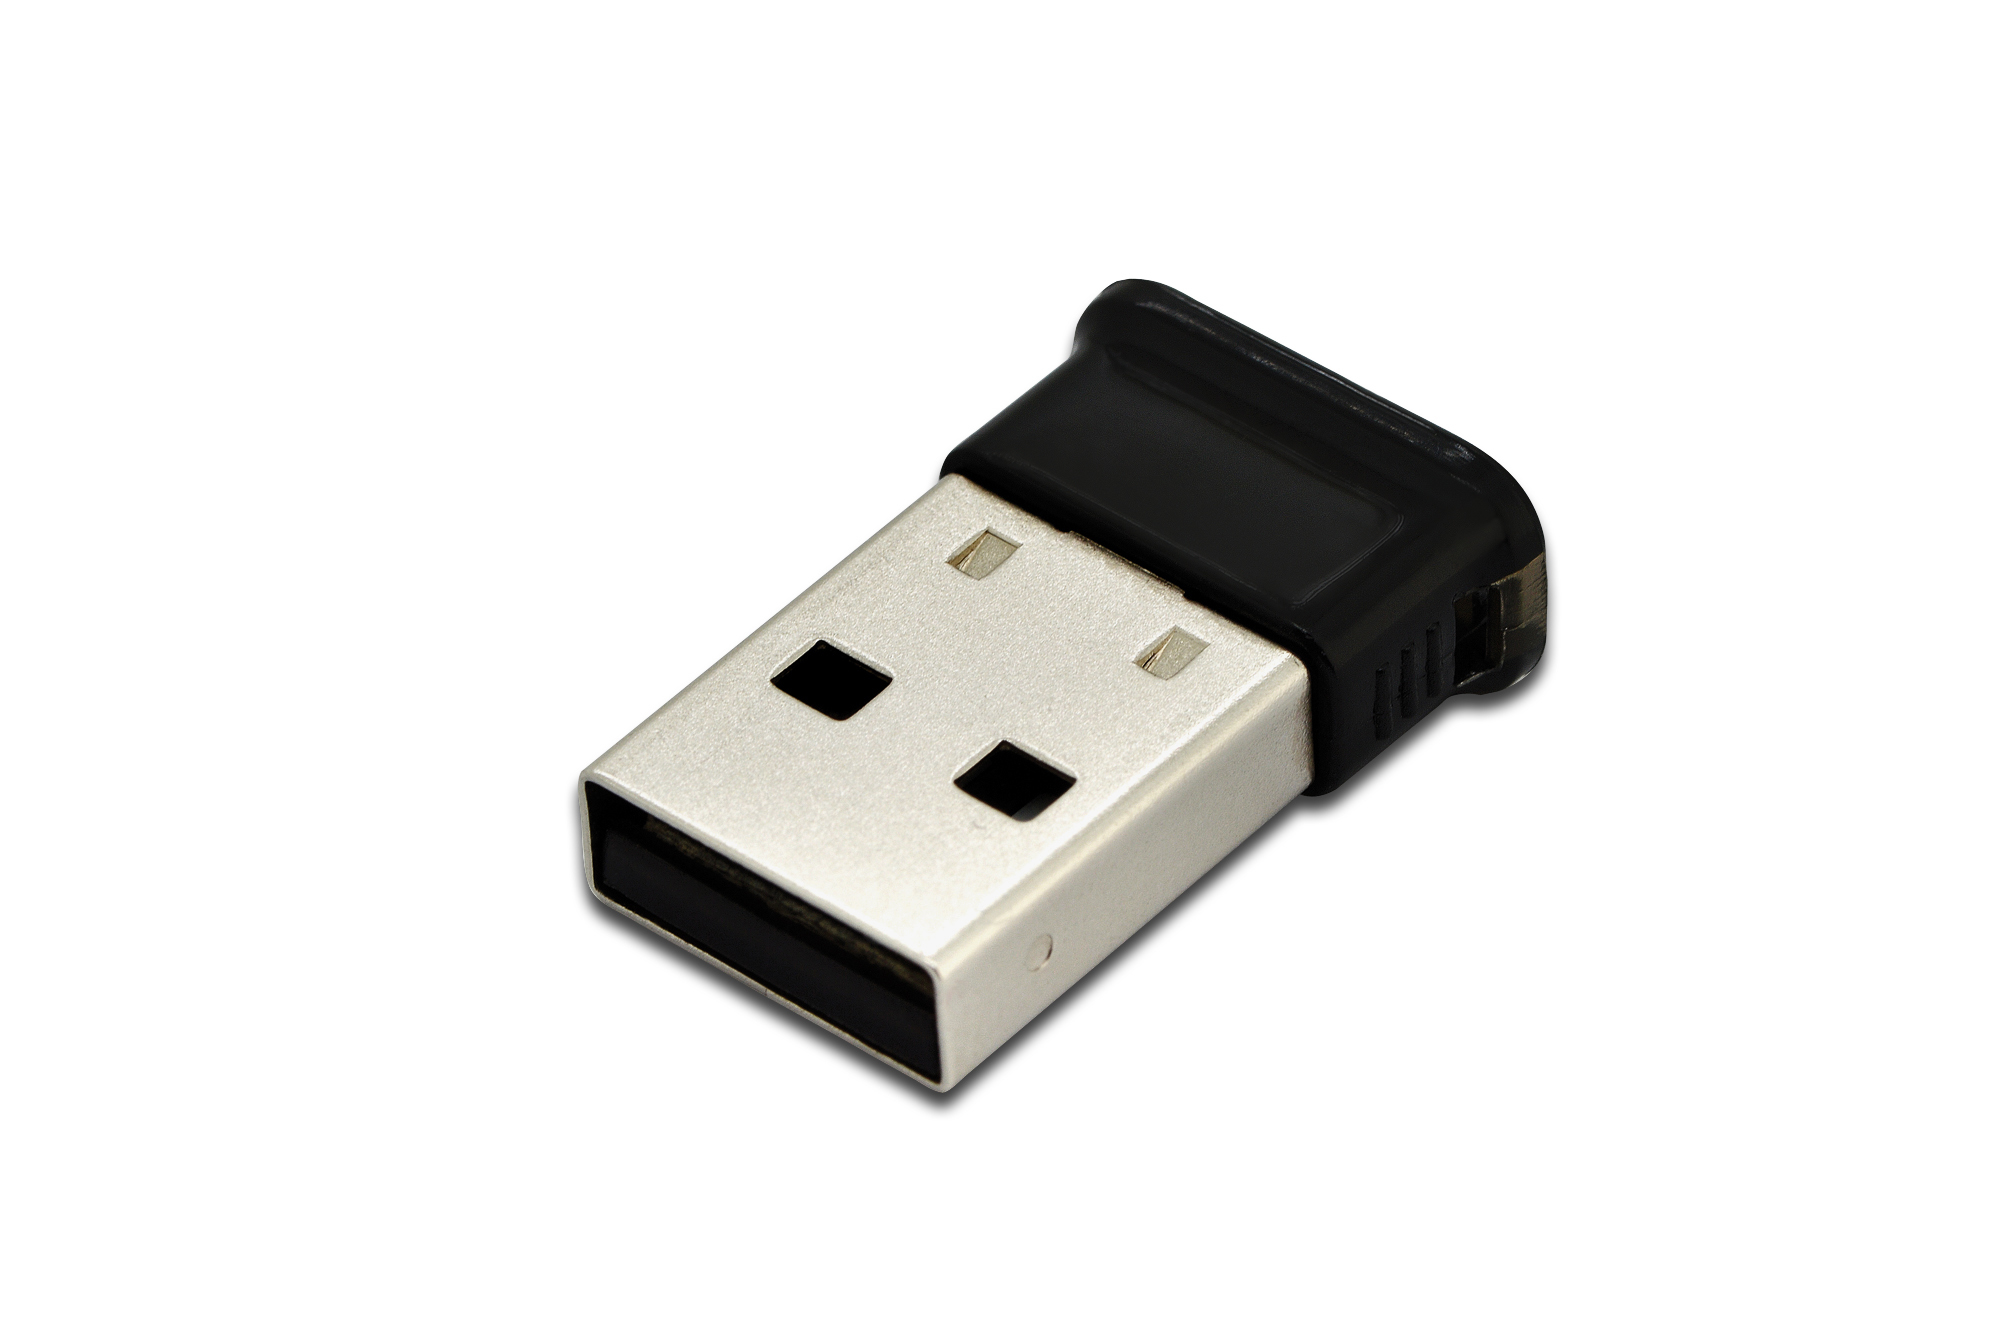 DN-30210-1 Bluetooth V4.0 + EDR Tiny USB Adapter. Class 2 CSR Factory Sealed